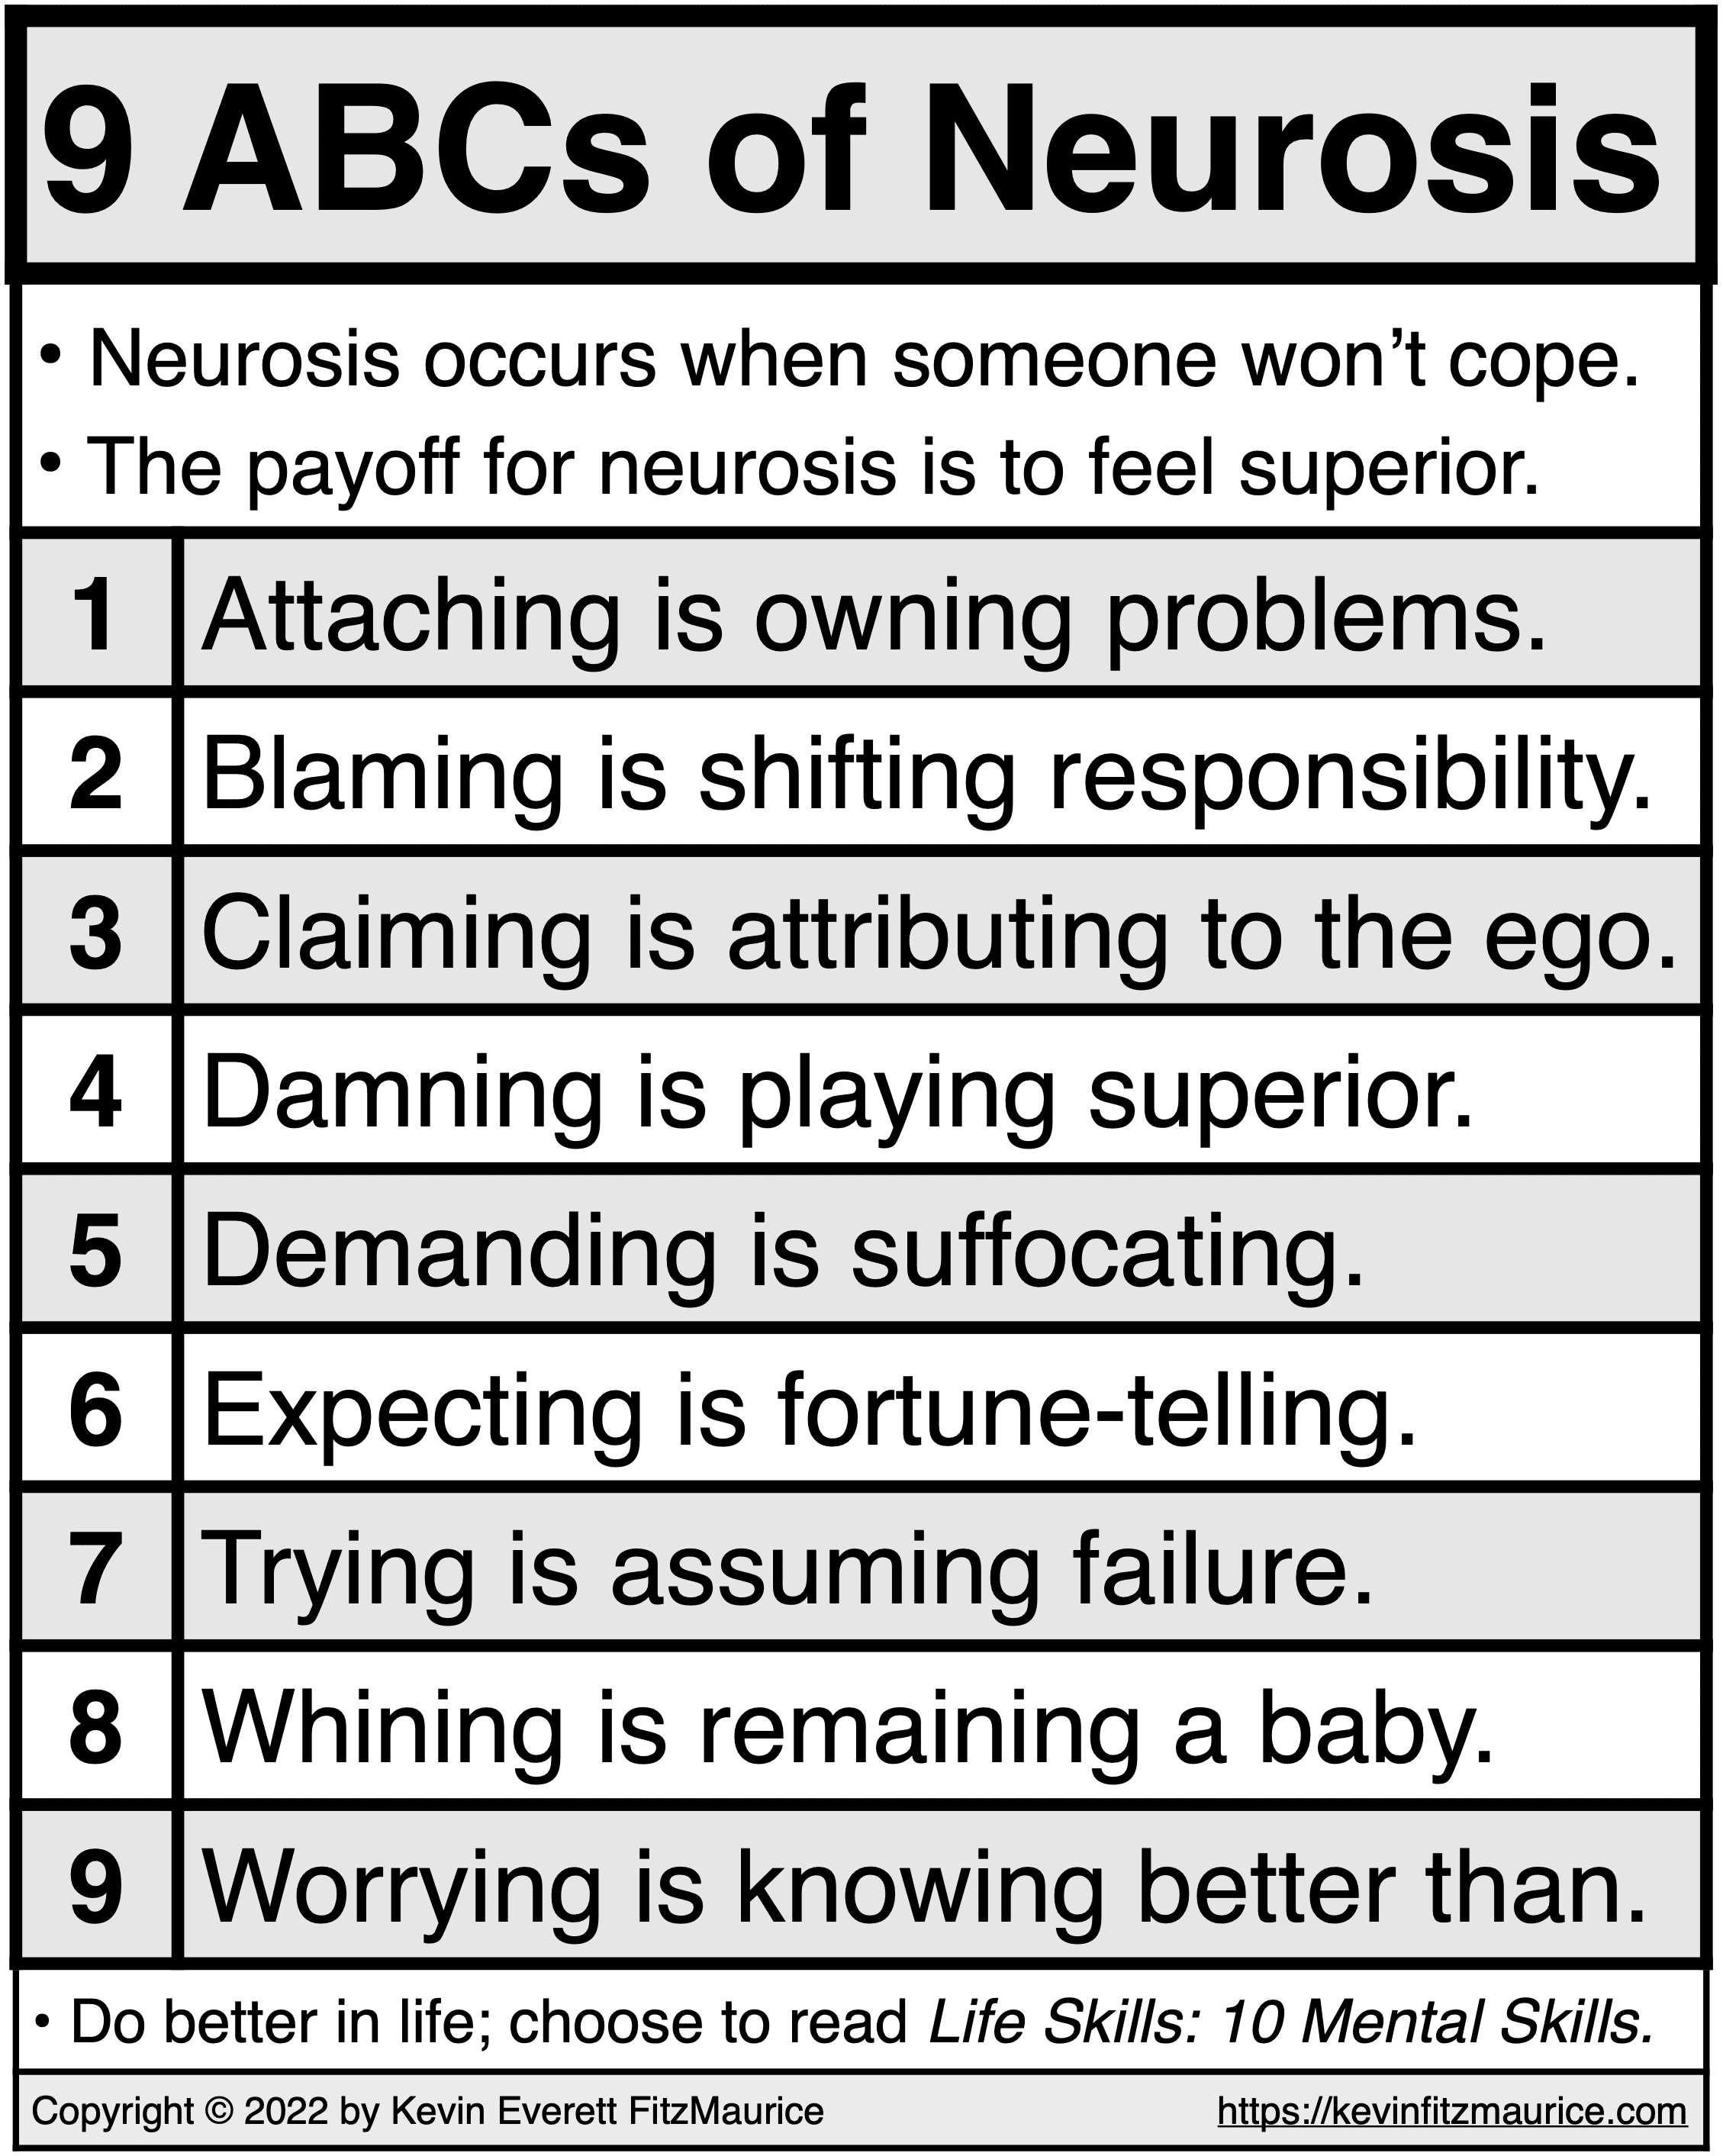 9 ABCs of Neurosis